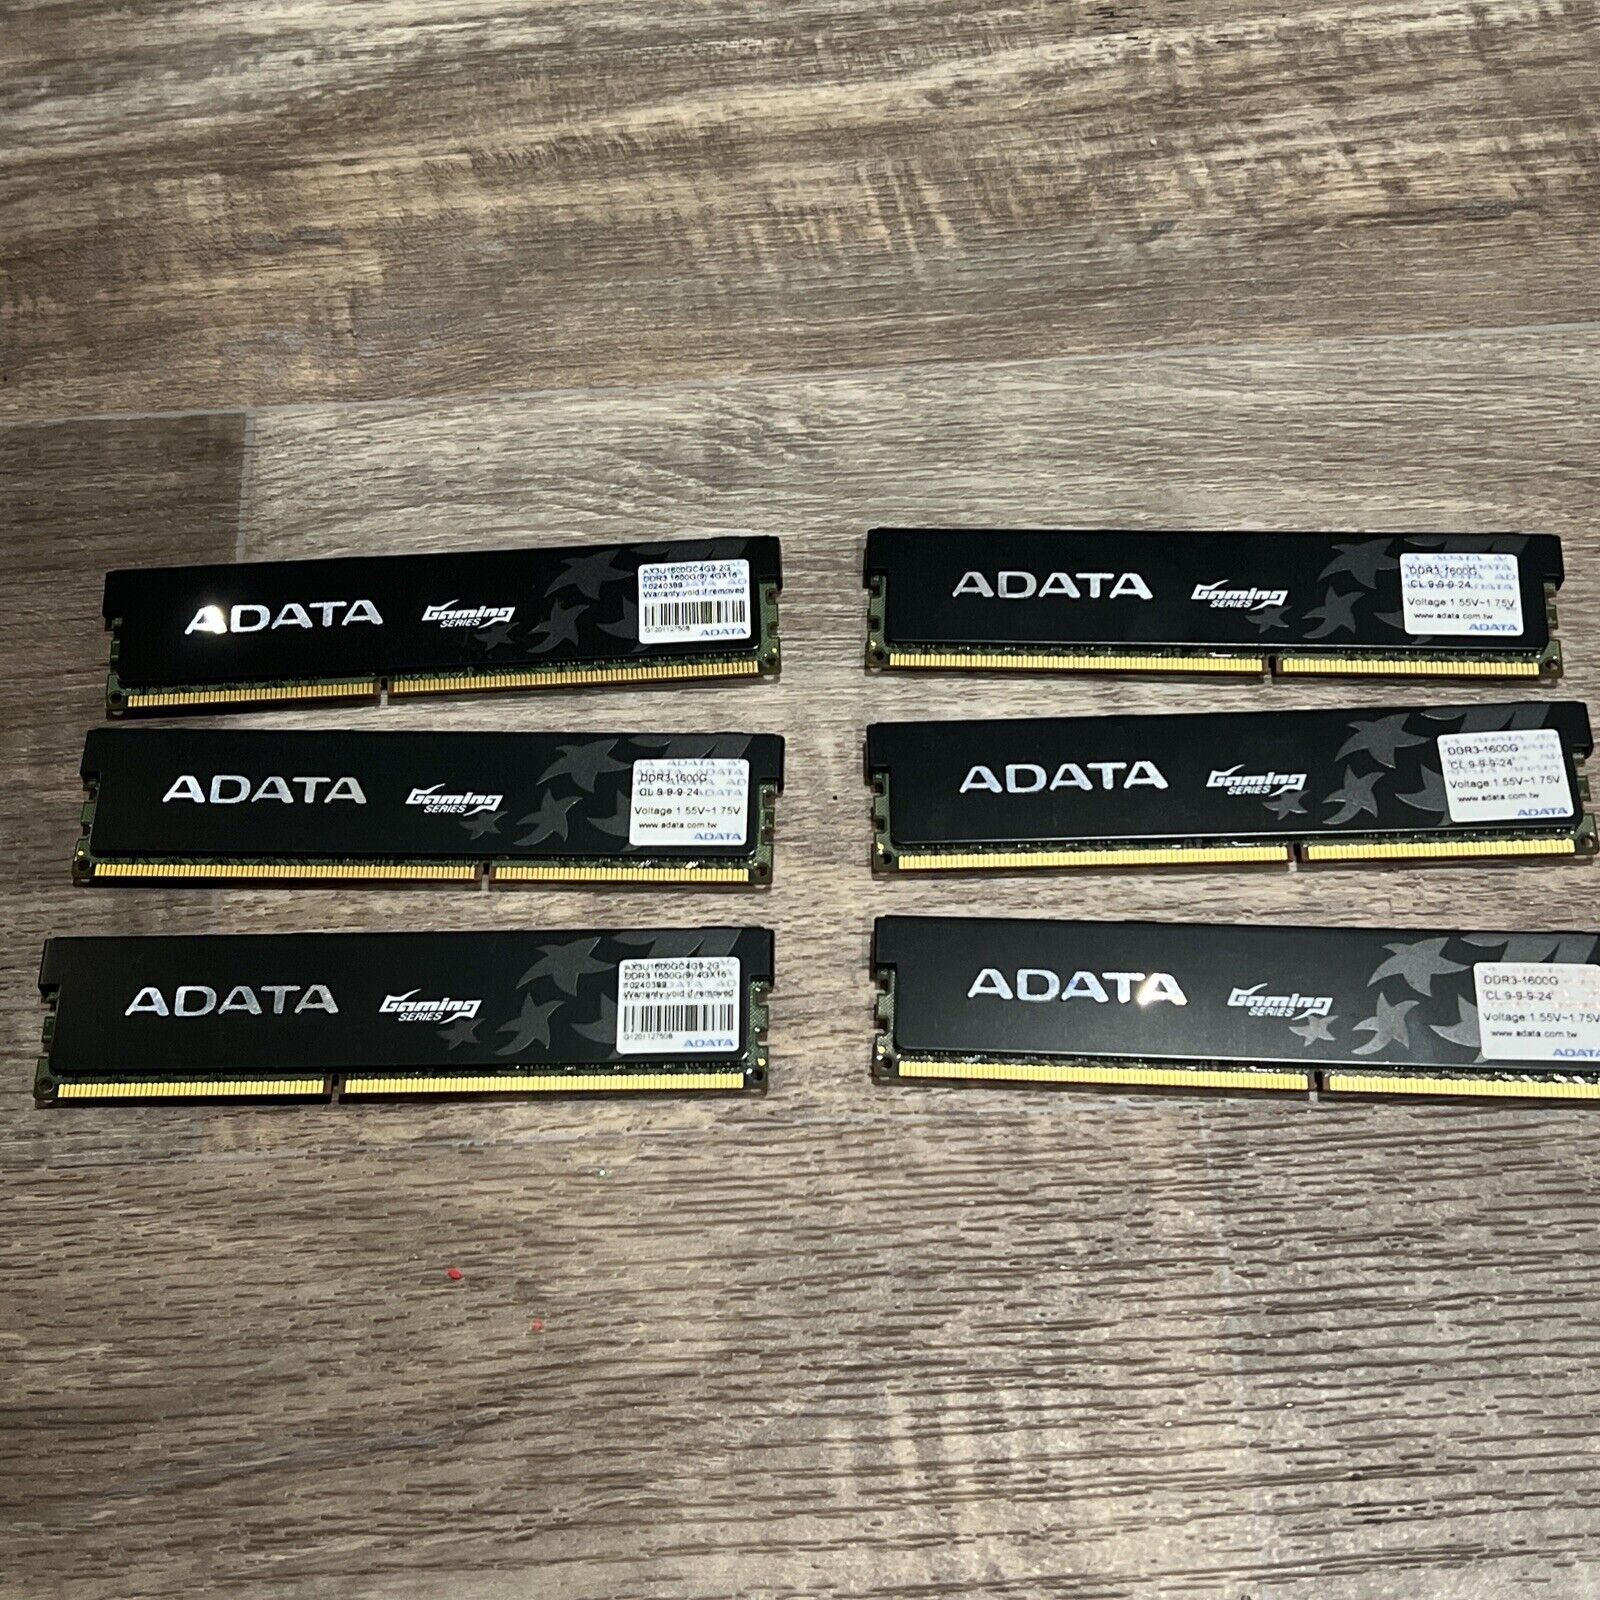 ADATA Gaming Series 4GB (6x4GB) DDR3 1600G PC3-12800 RAM AX3U1600GB4G9-2G - Used